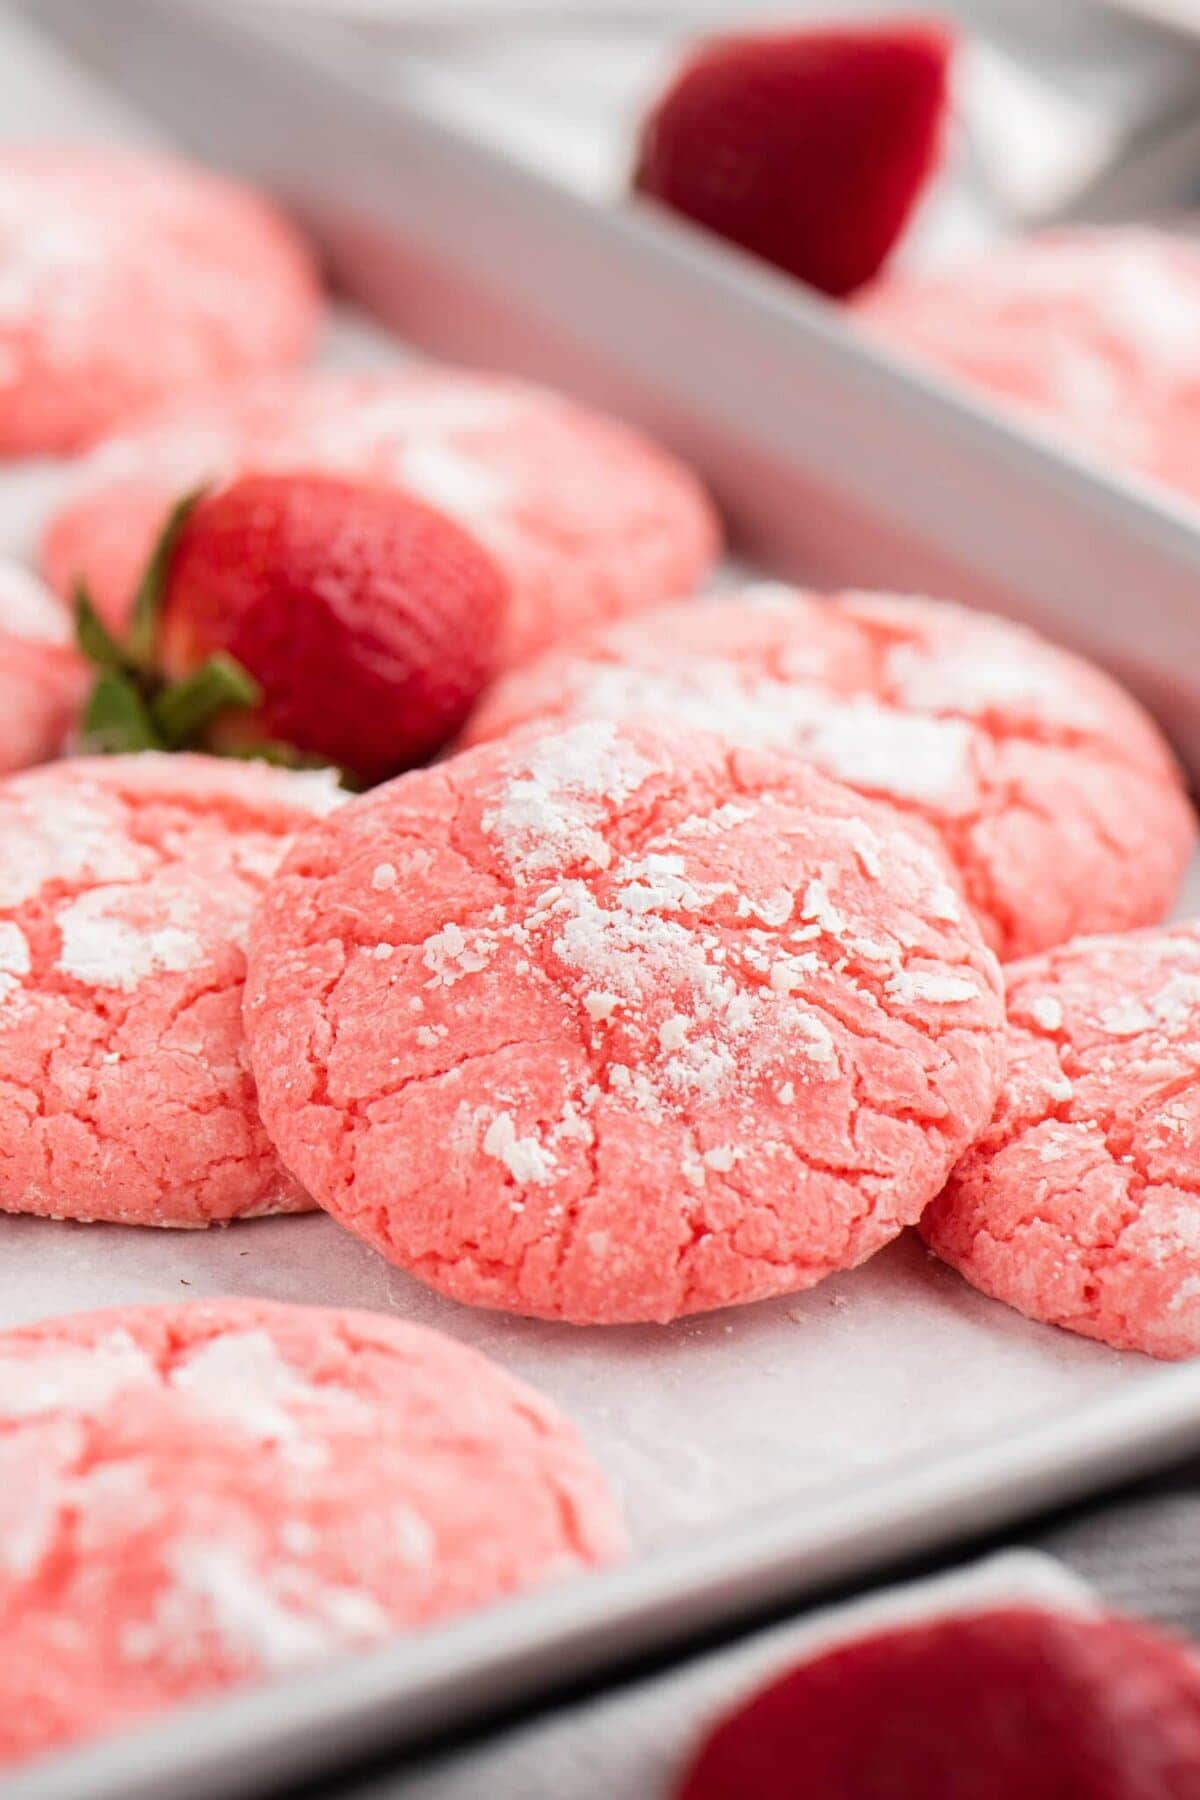 Strawberry Cheesecake Cookies on baking sheet